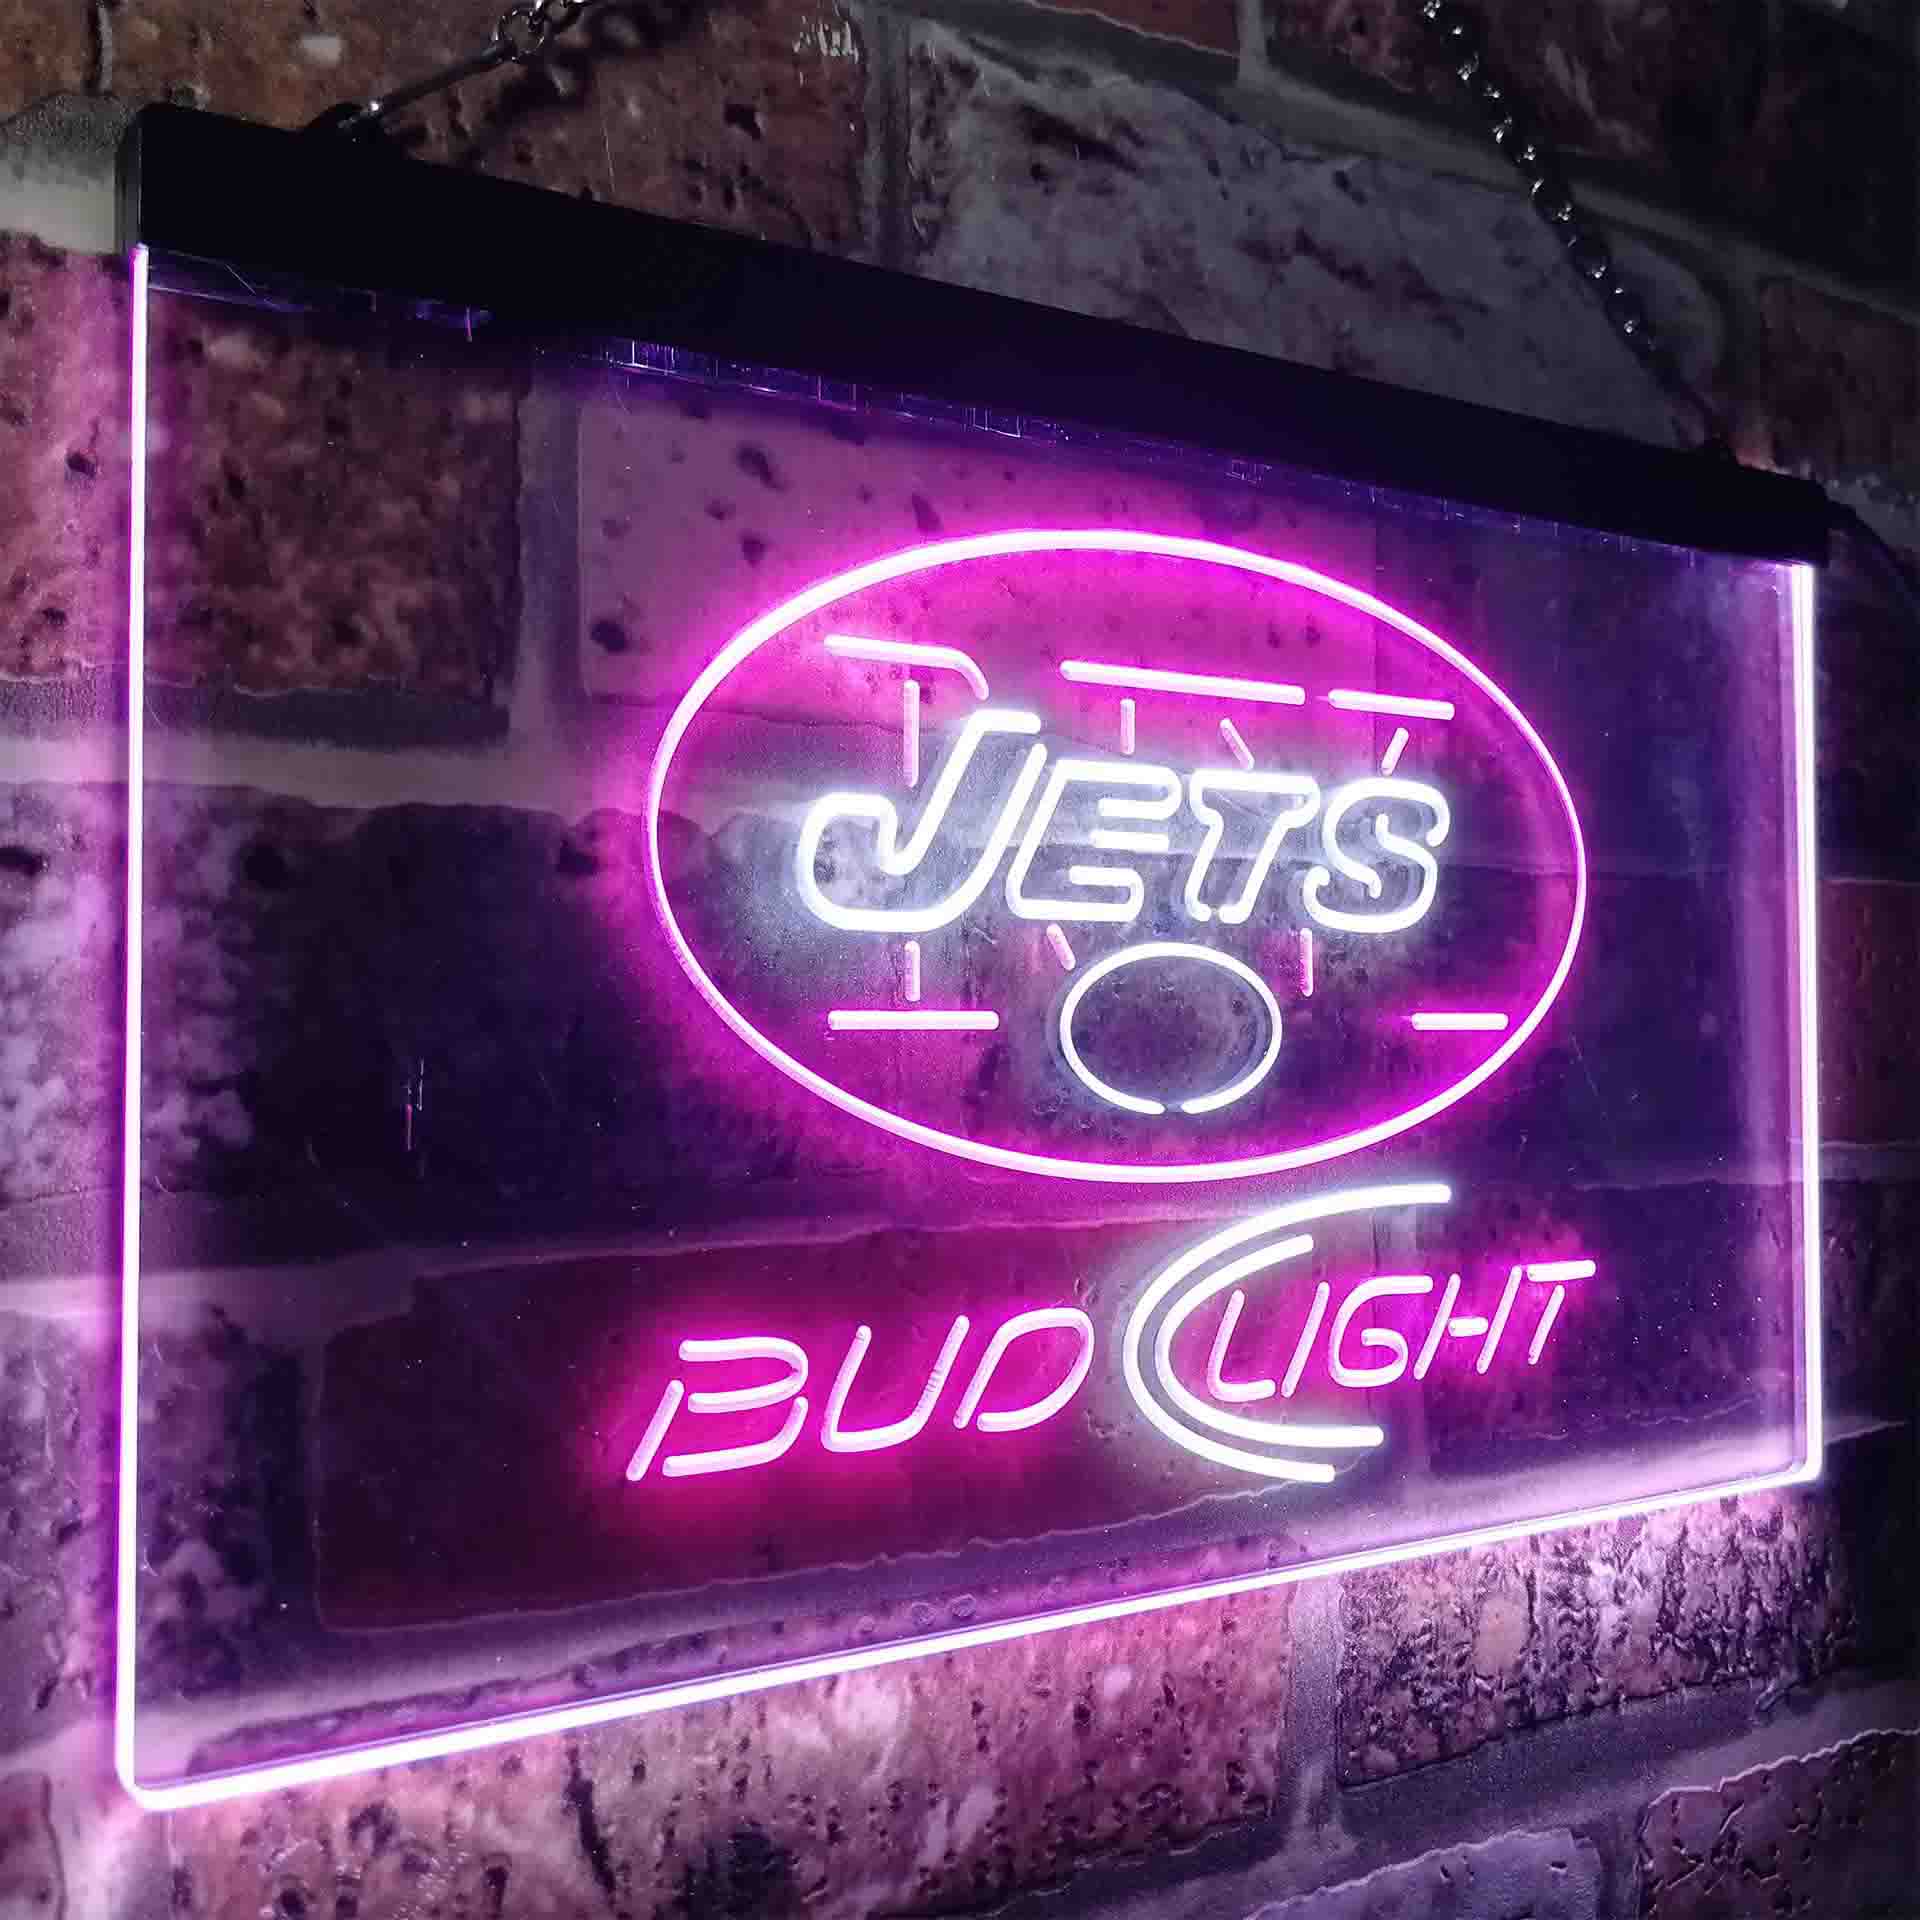 New York Jets Bud Light LED Neon Sign